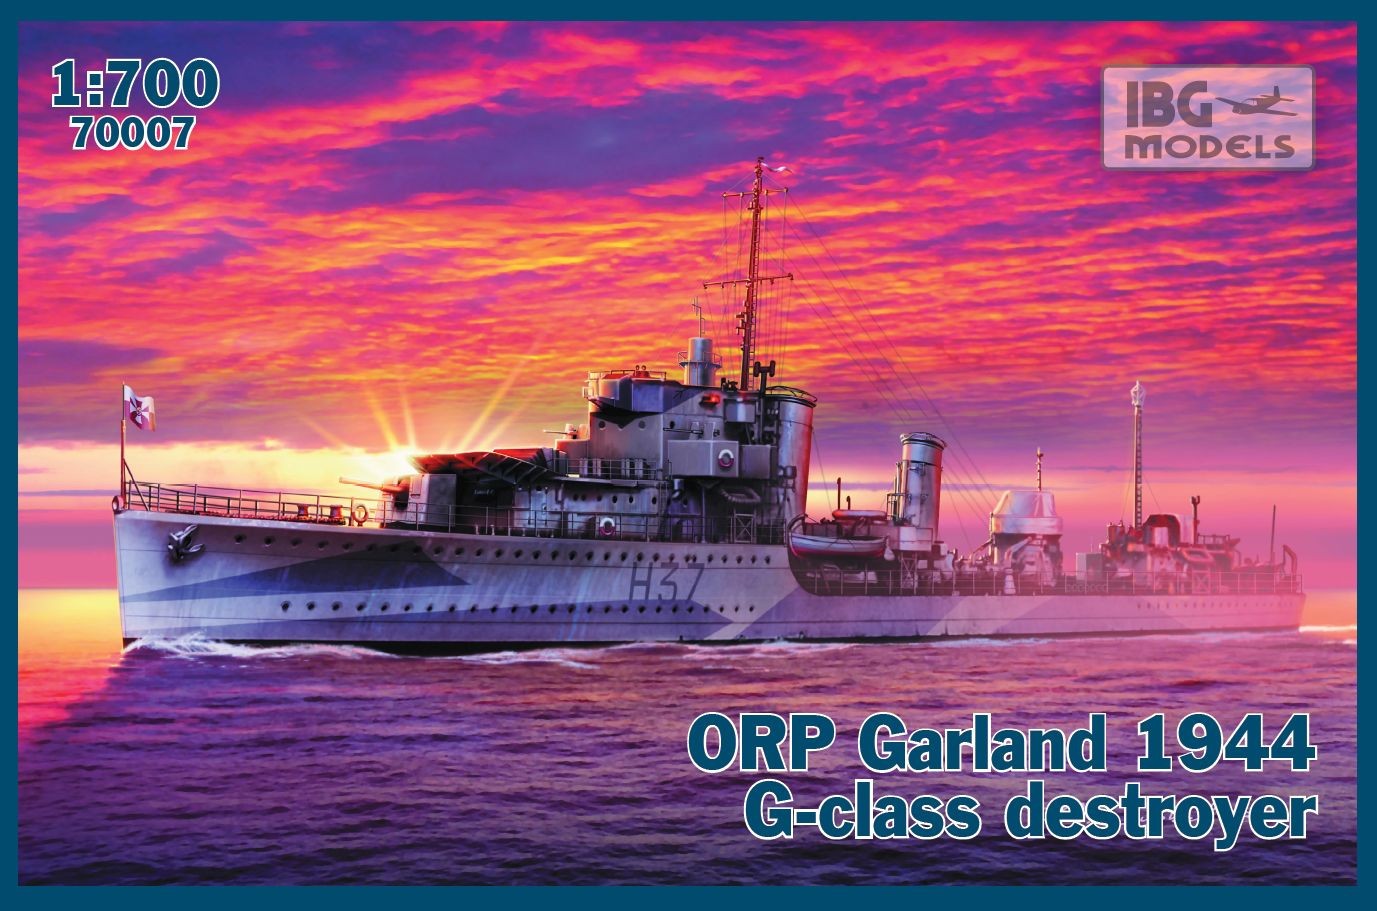 Maquette IBG ORP (anciennement HMS) Garland 1944, destroyer classe G- 